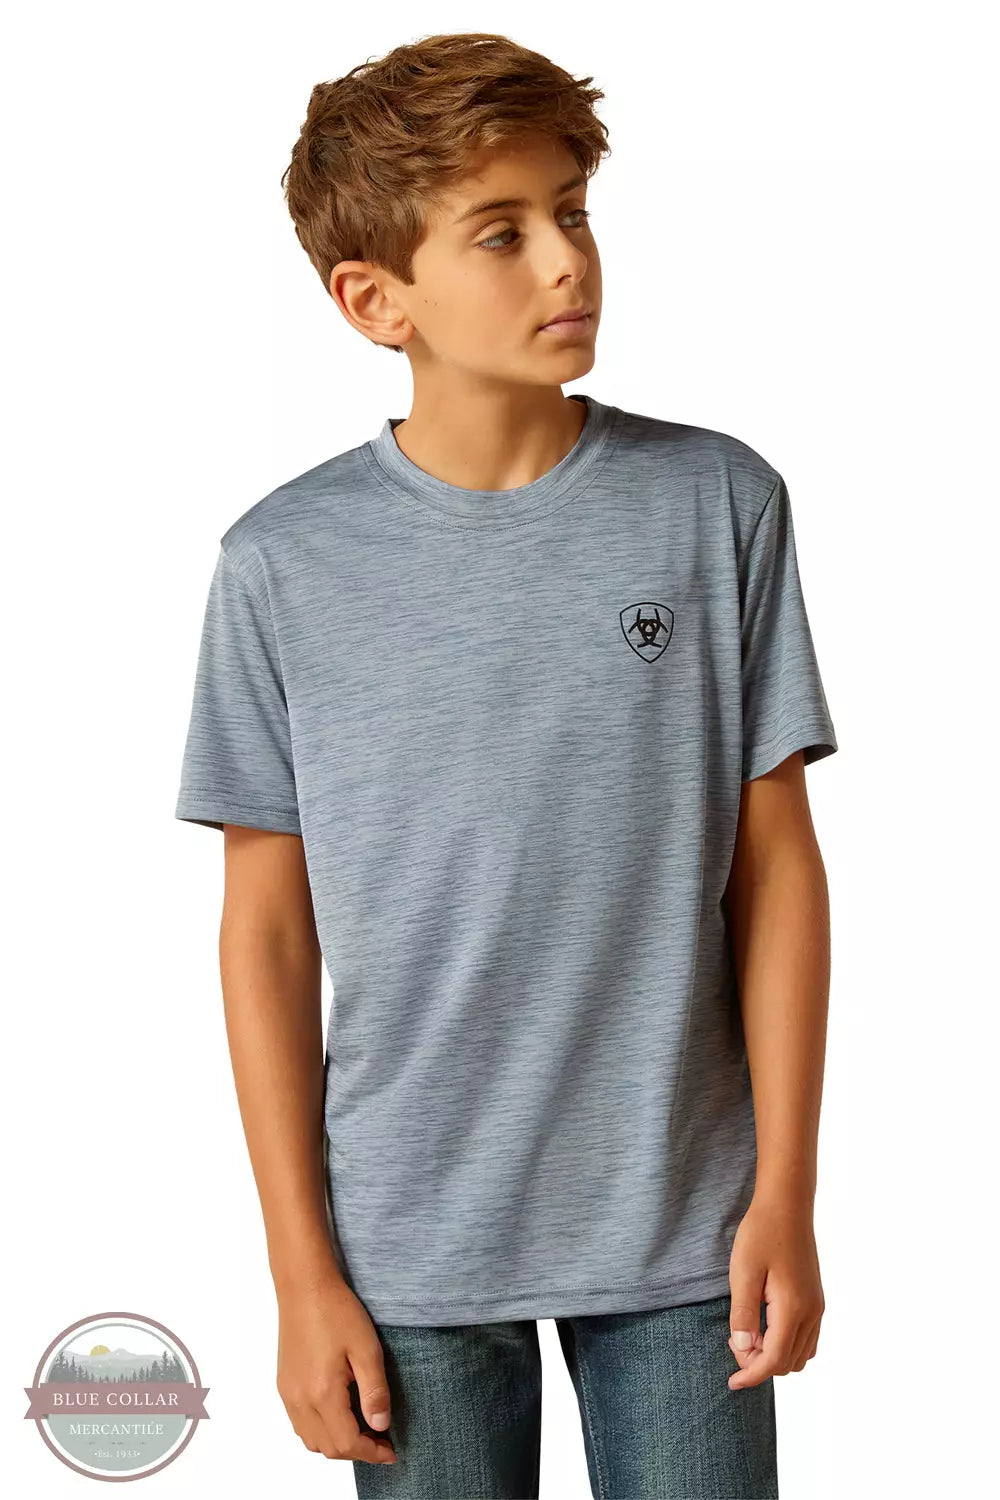 Ariat 10048650 Newsboy Blue Charger Spirited T-Shirt Front View